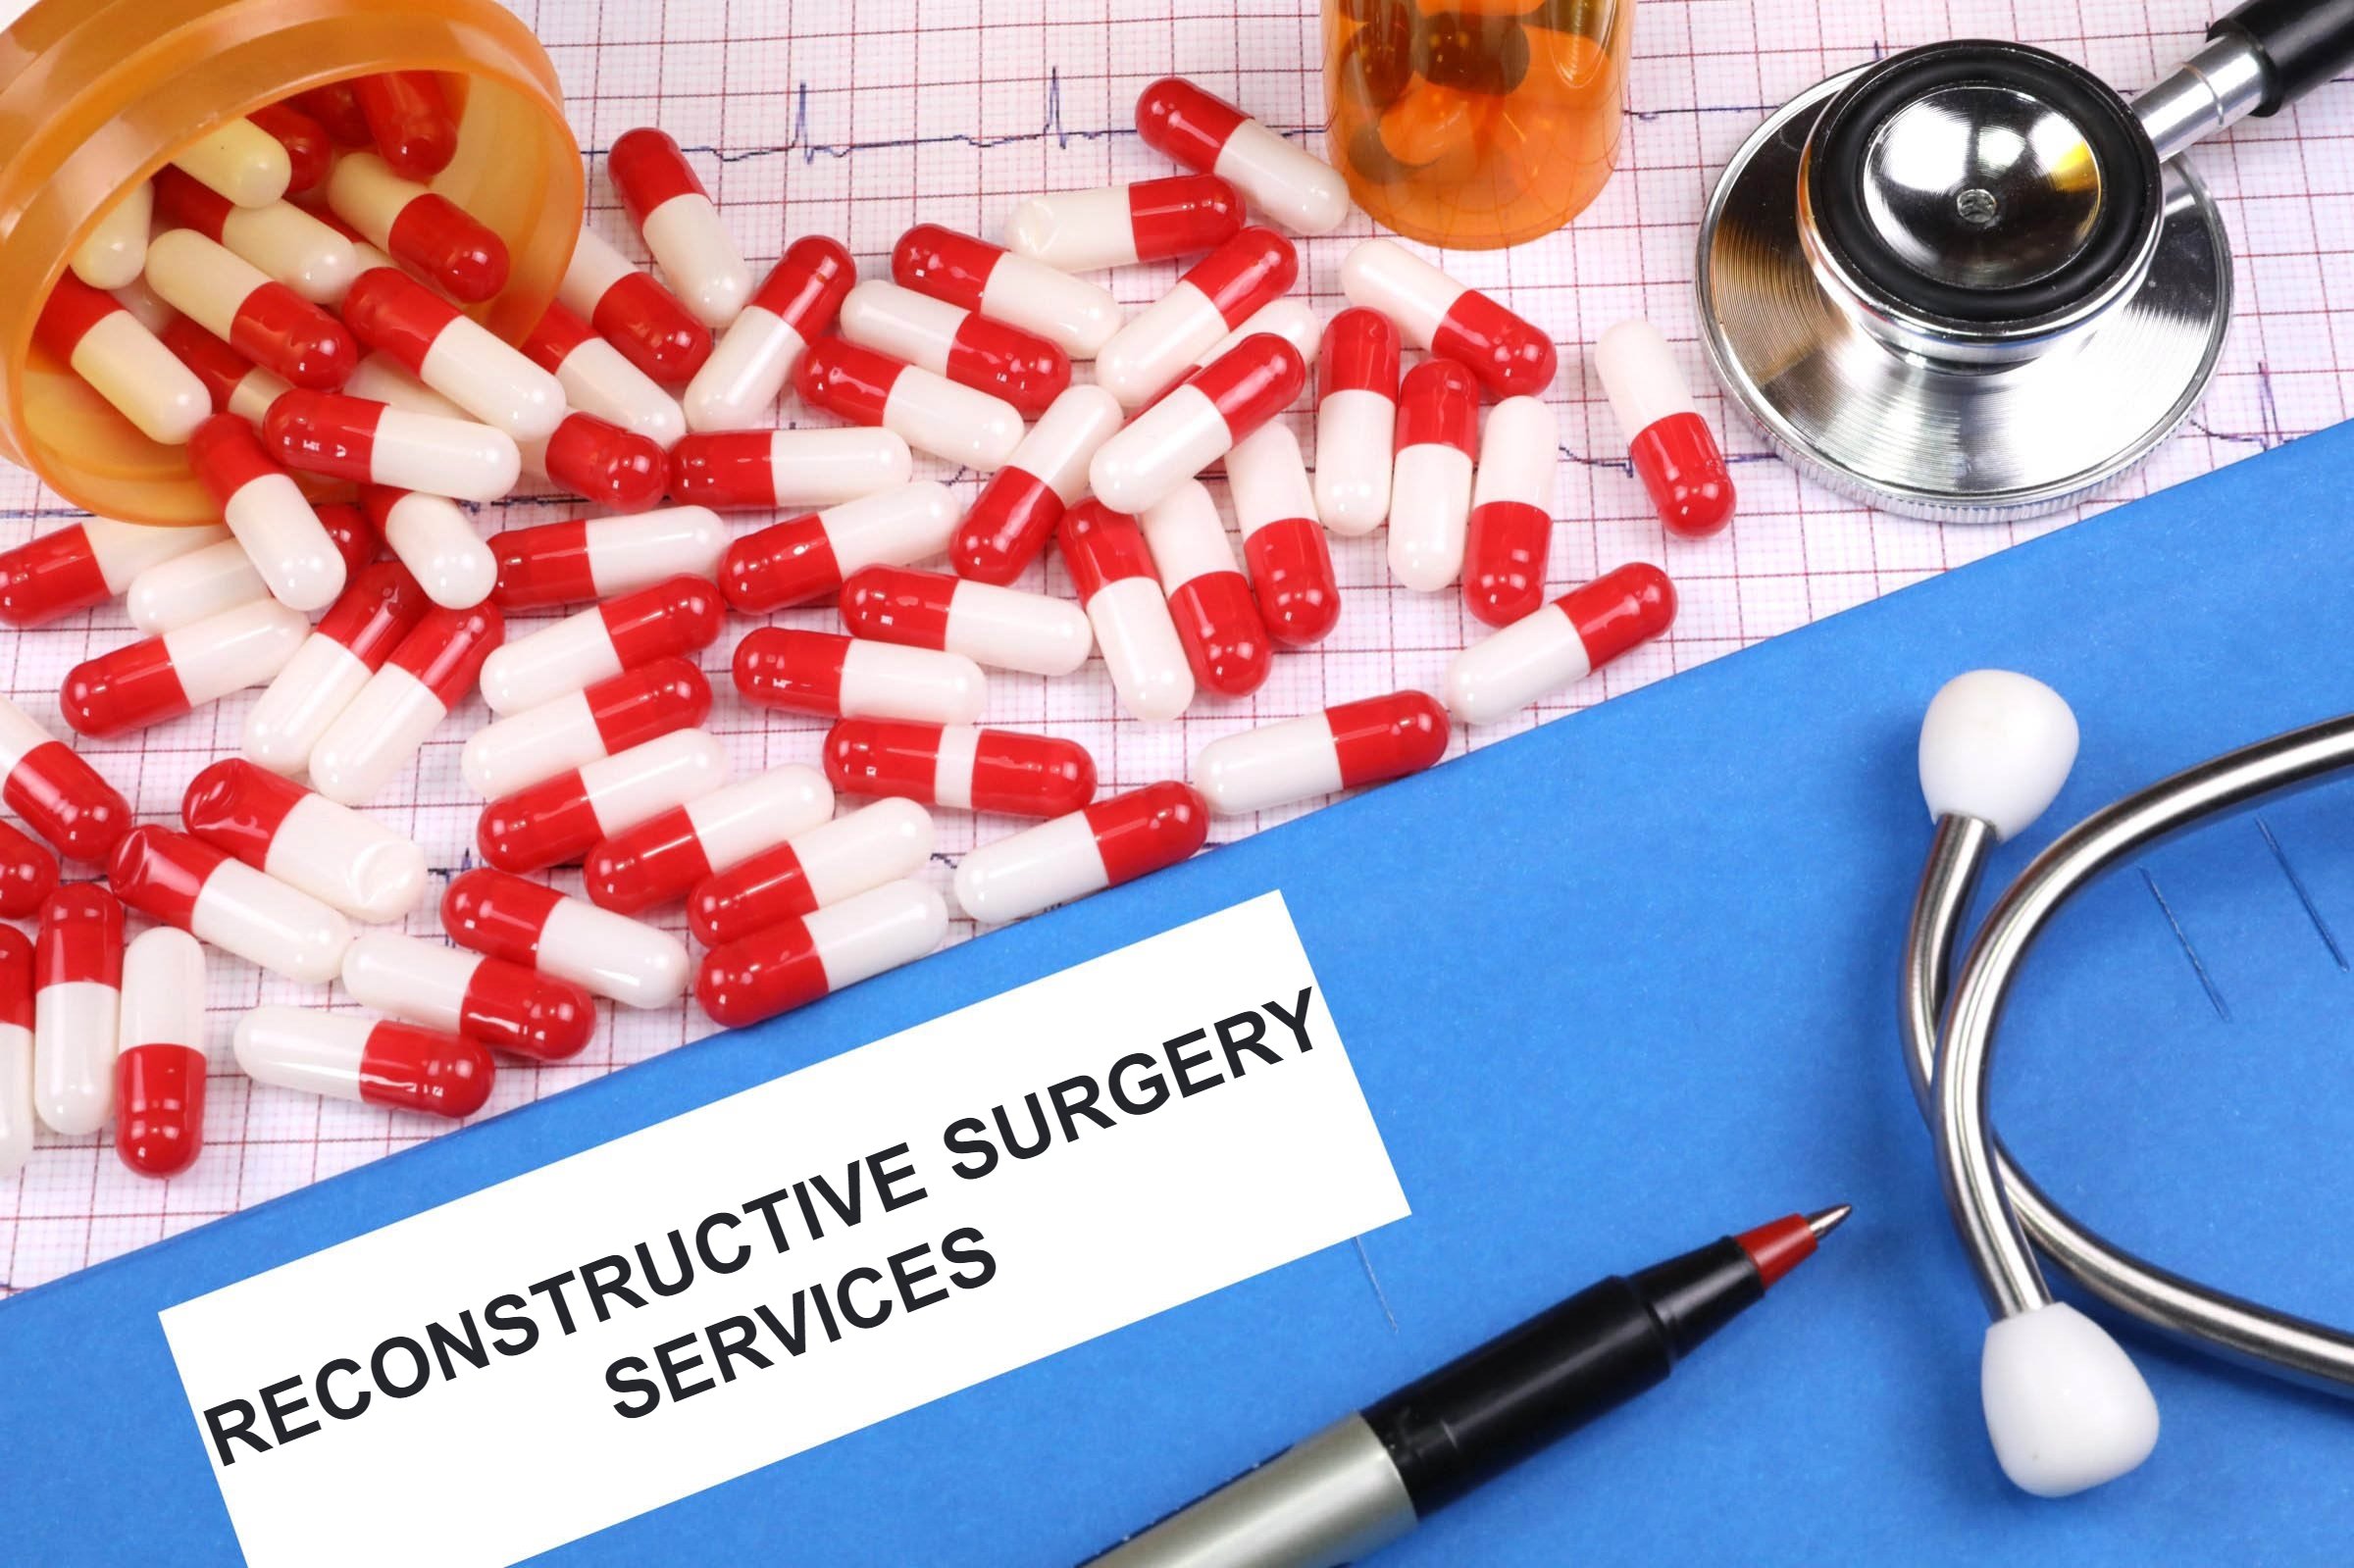 reconstructive surgery services